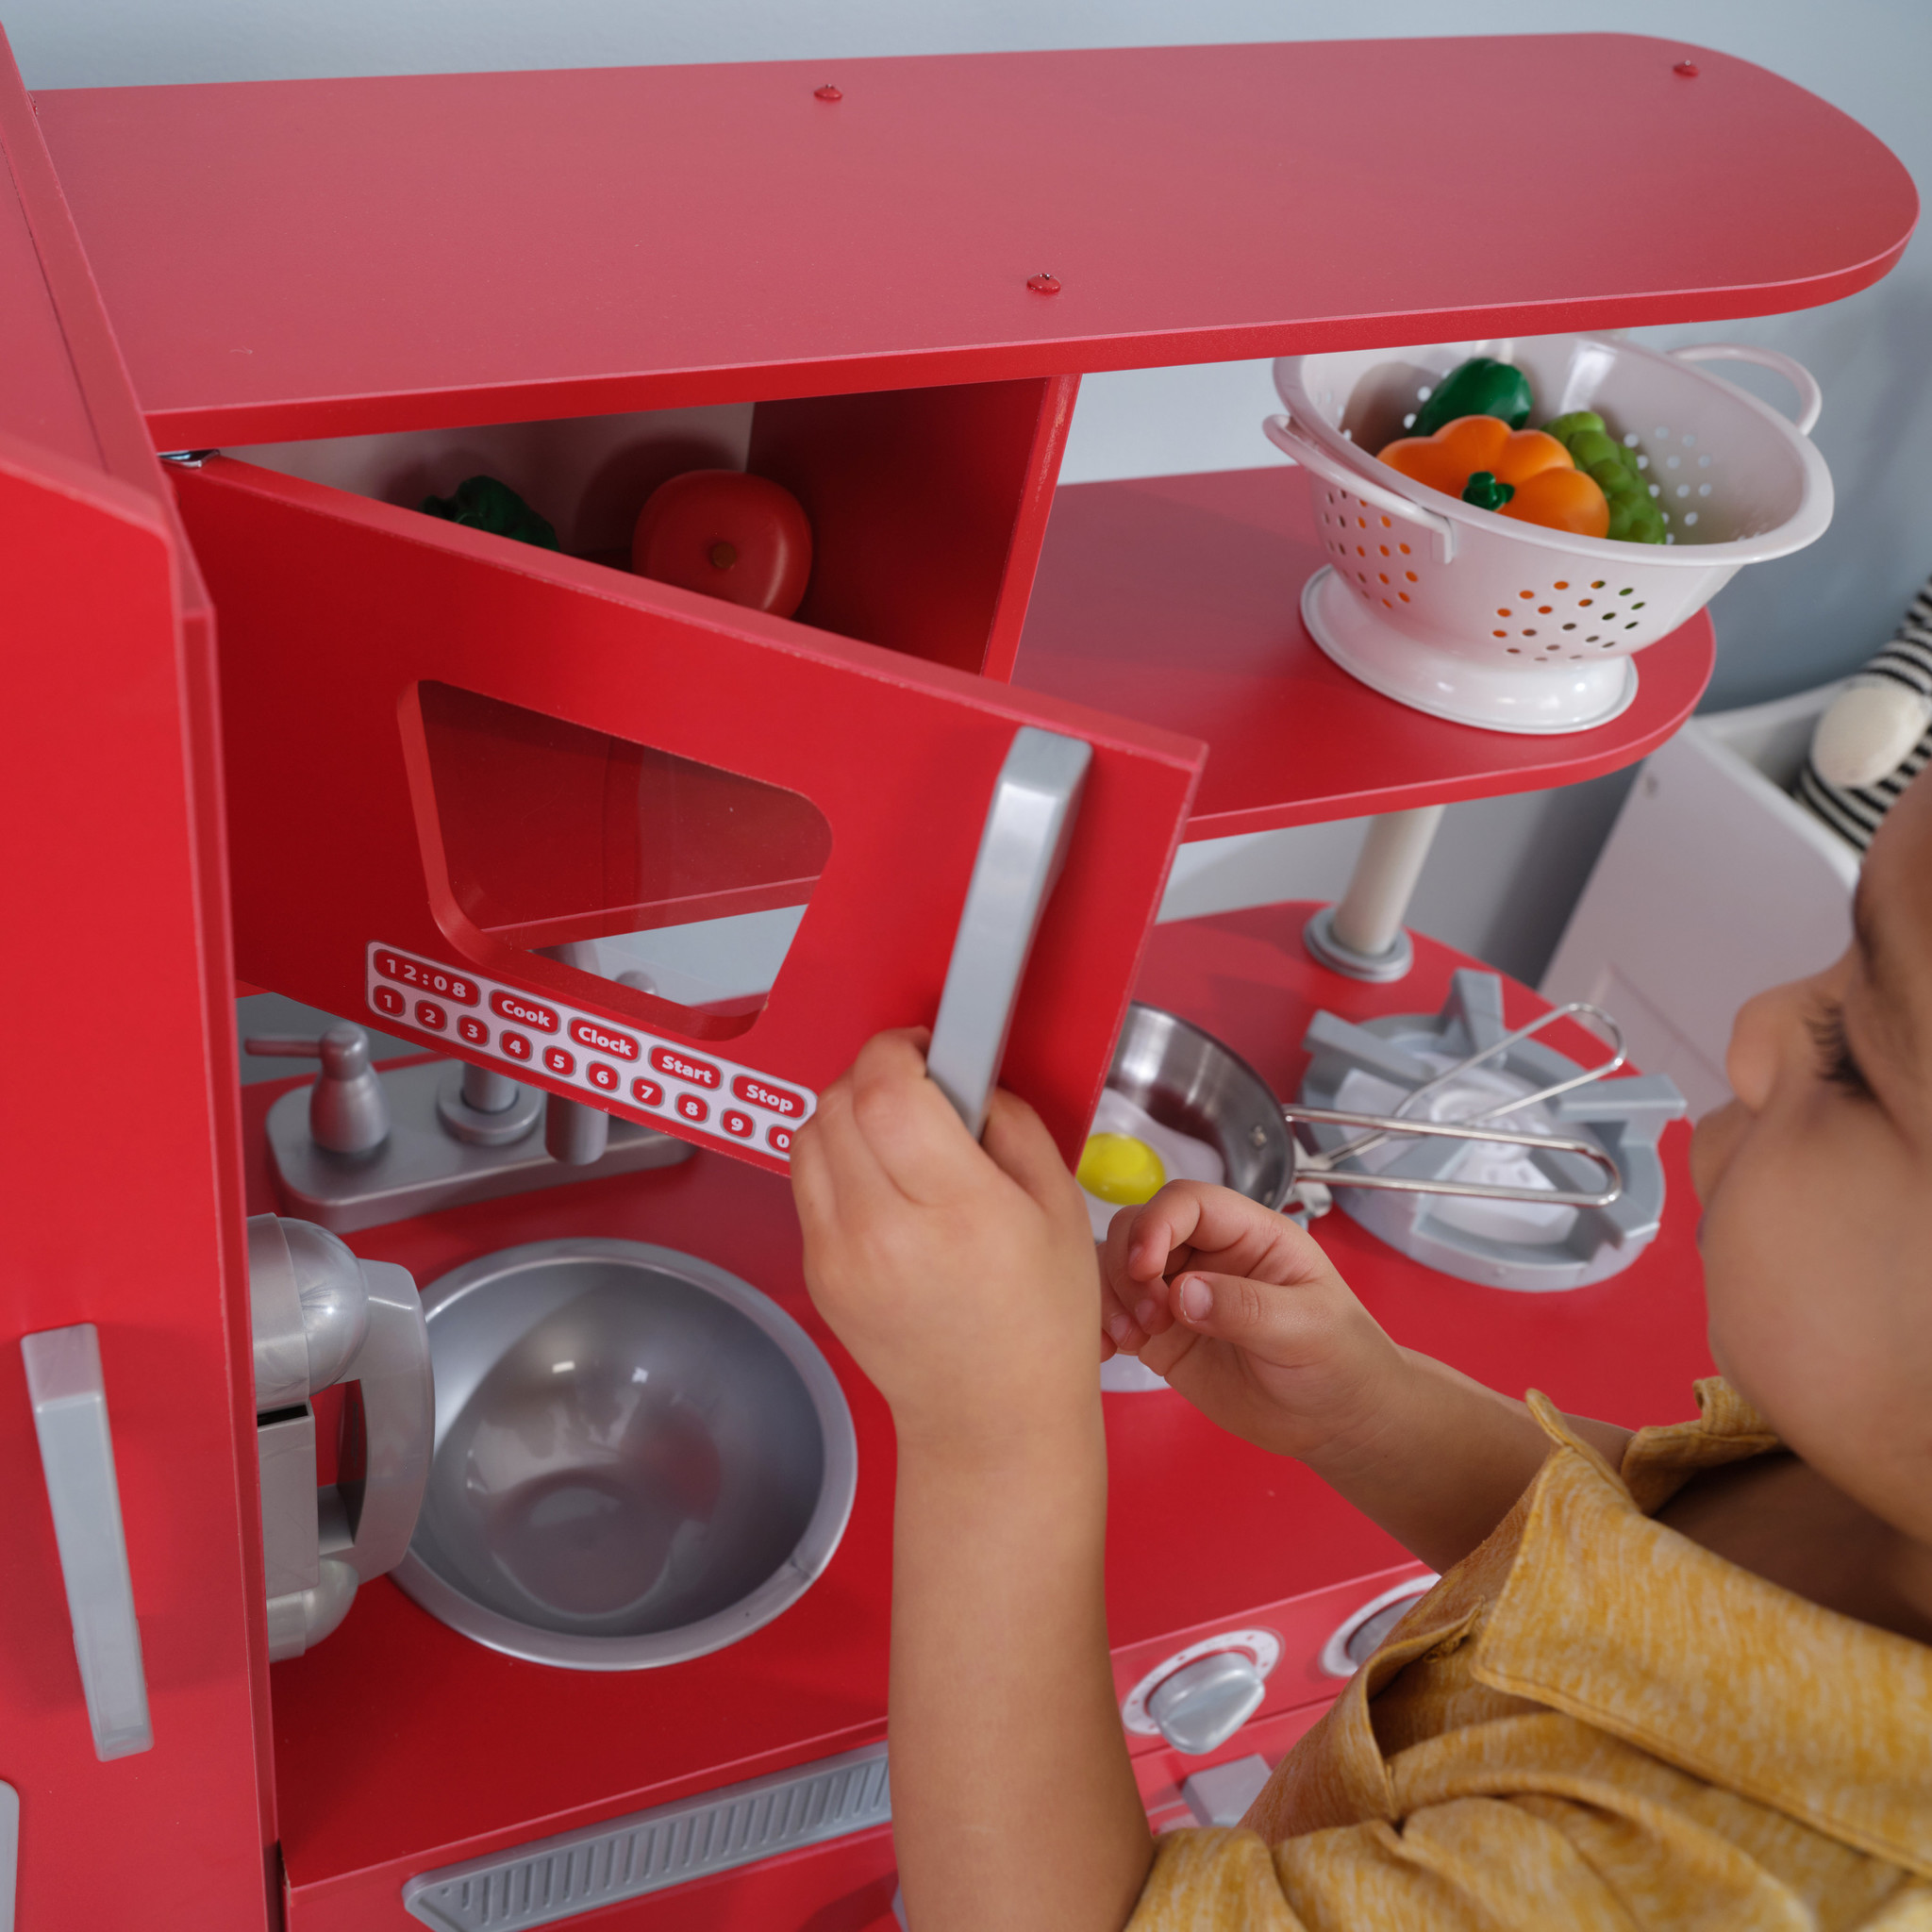 https://cdn.webshopapp.com/shops/9071/files/416880940/play-kitchen-red-red-toy-kitchen-for-children.jpg